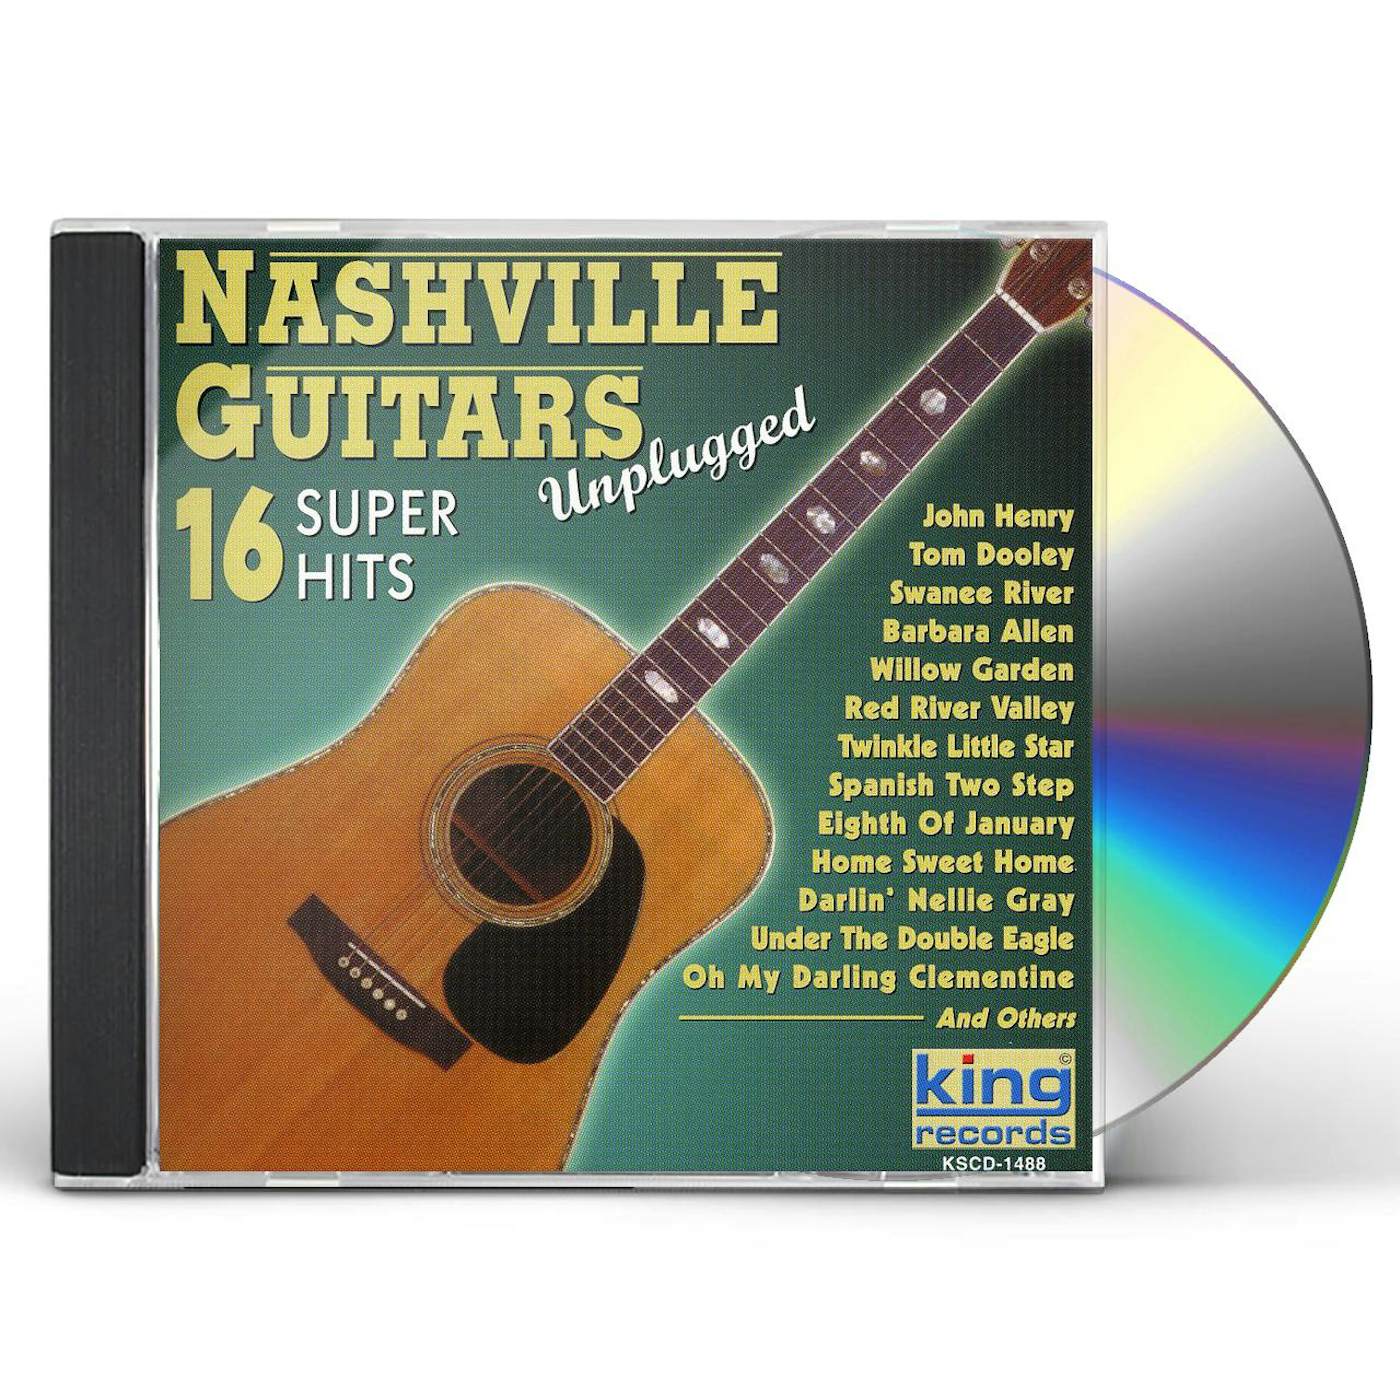 Nashville Guitars 16 SUPER HITS (UNPLUGGED) CD